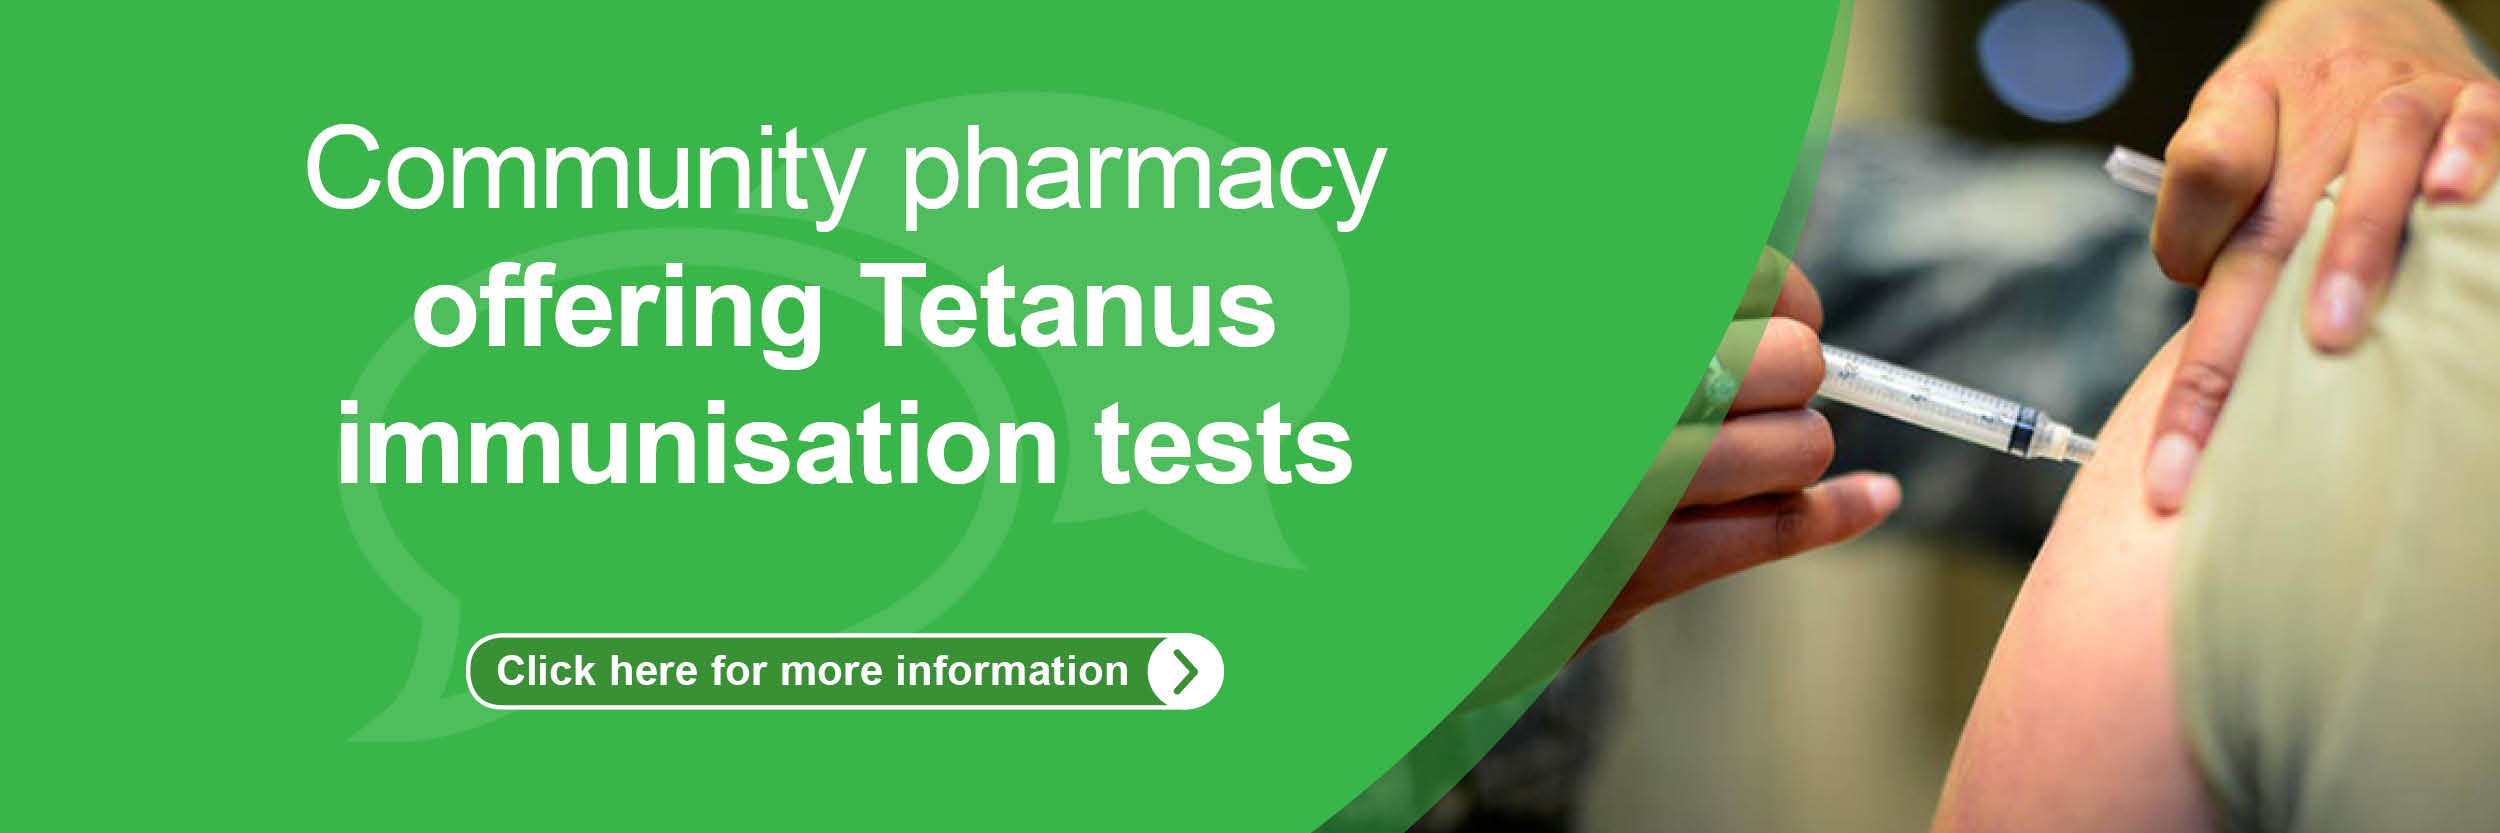 Tetanus immunization testing  